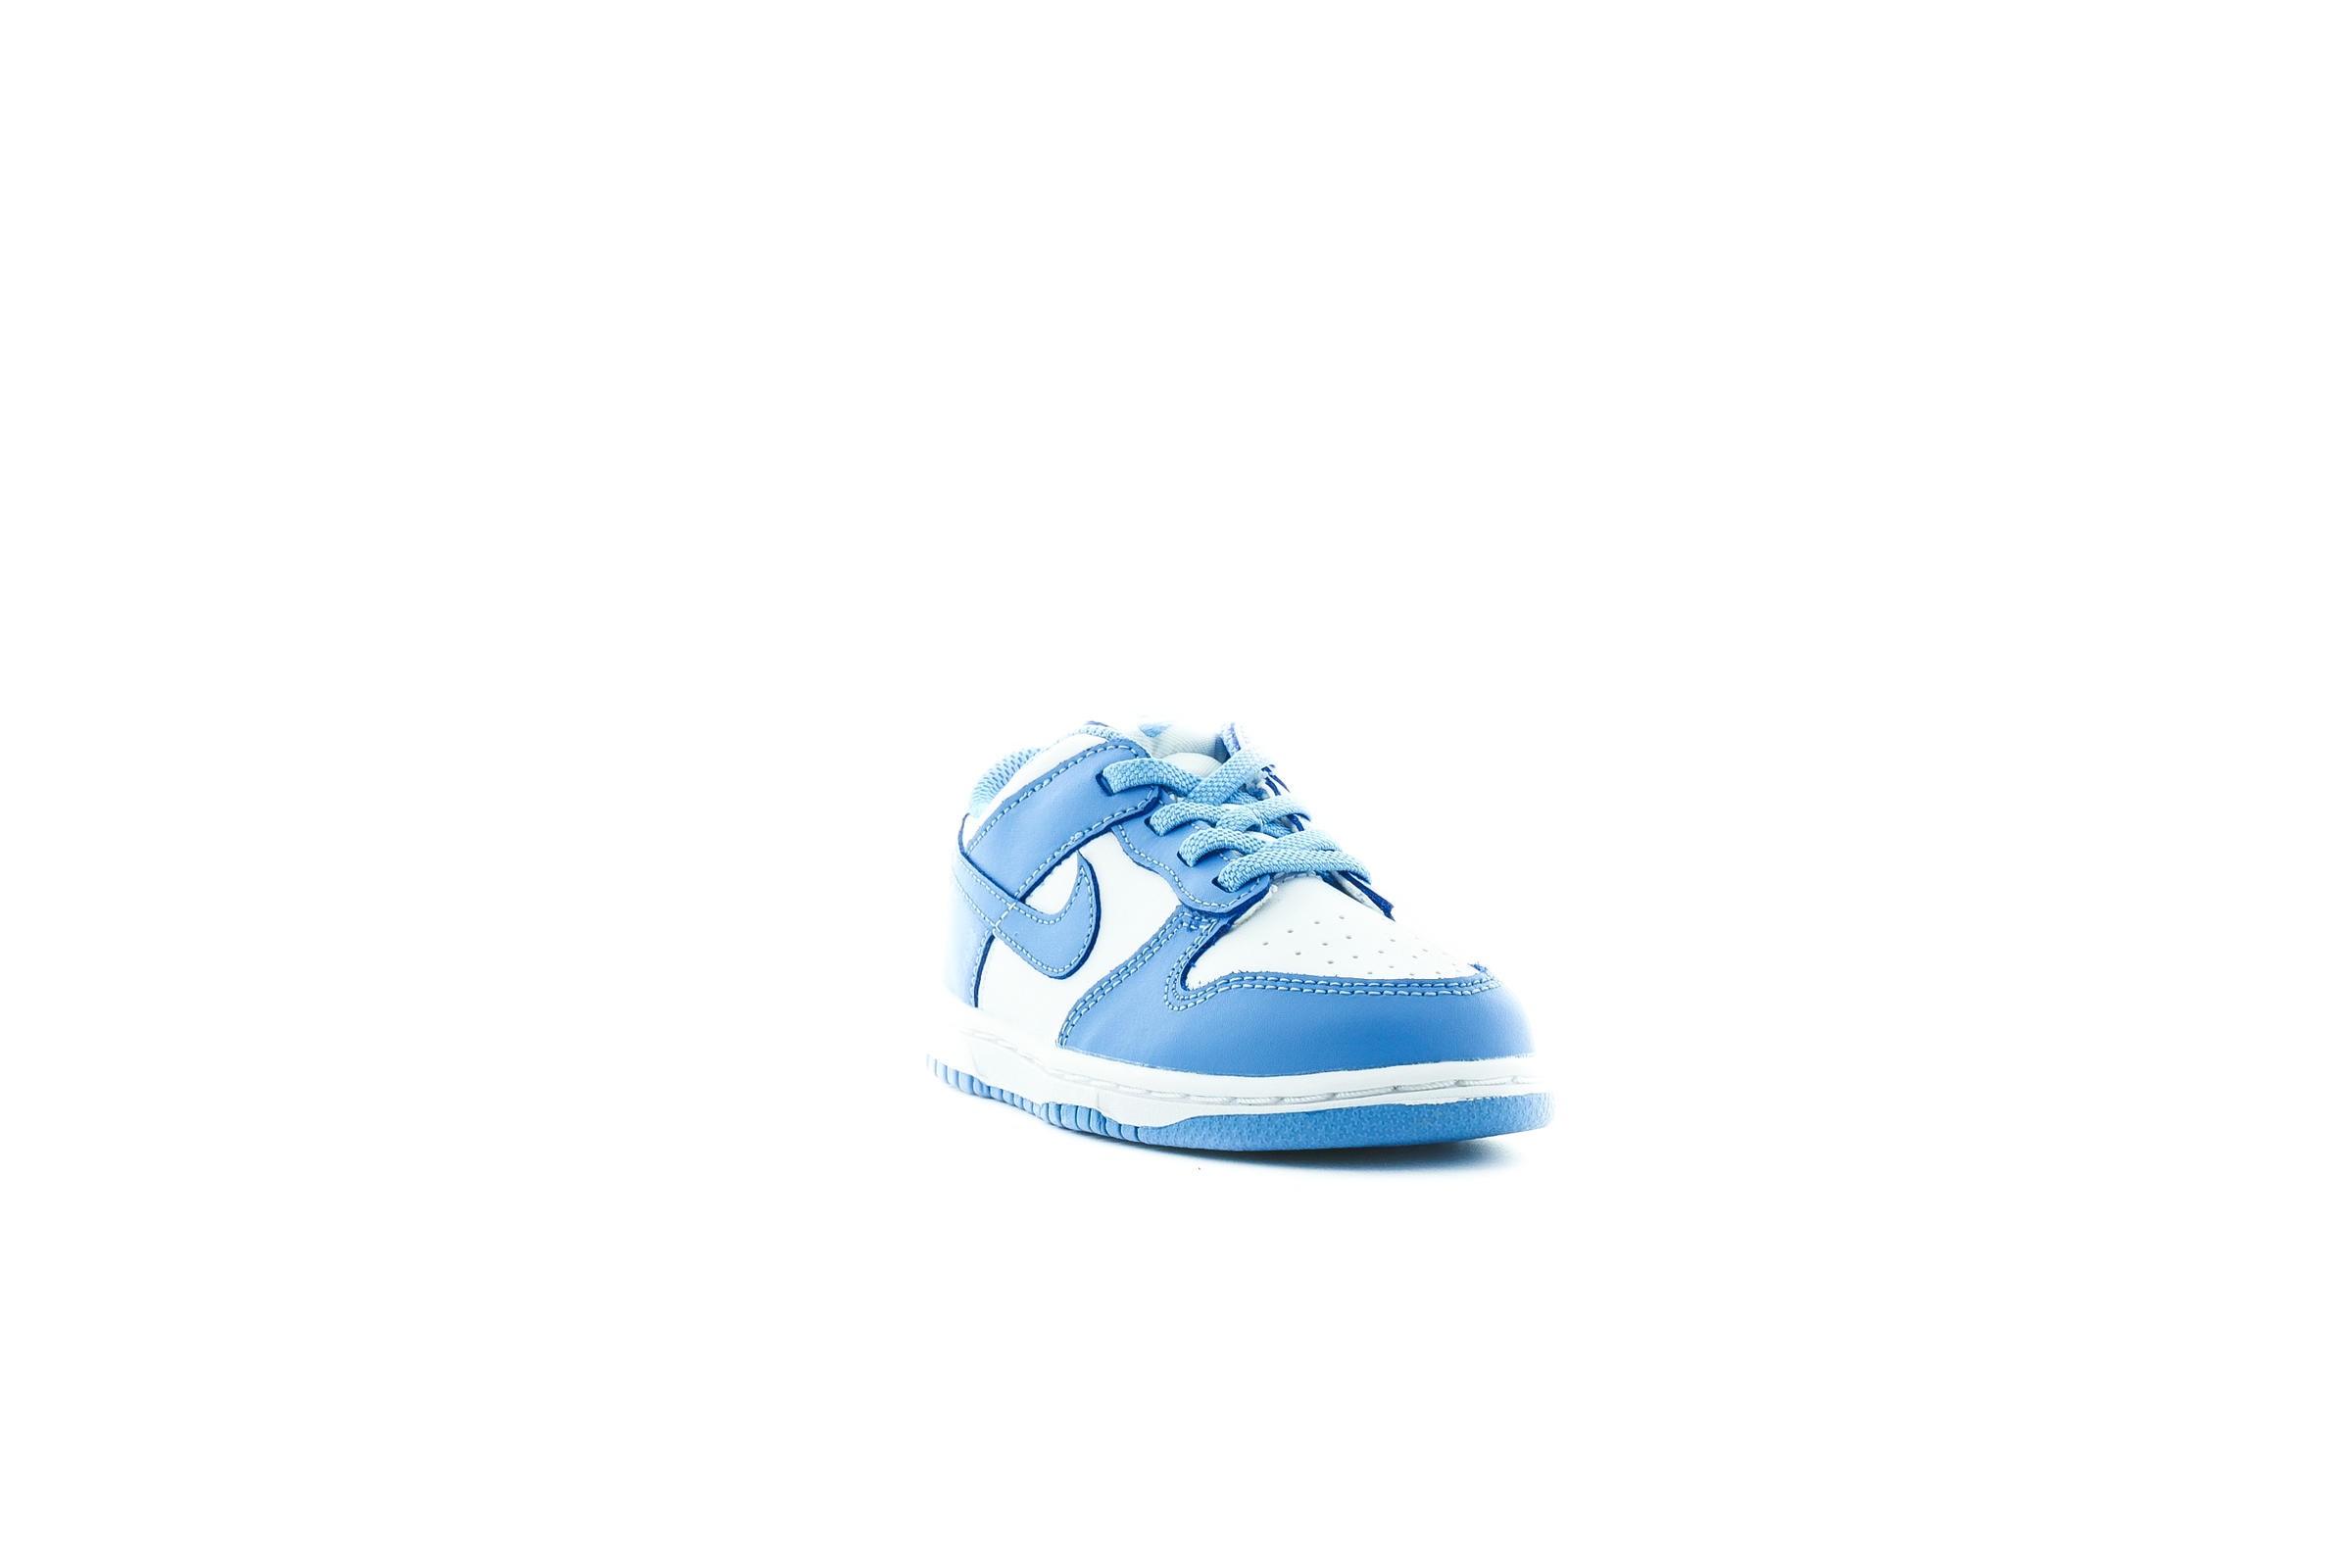 Nike DUNK LOW (TDE) "UNIVERSITY BLUE"